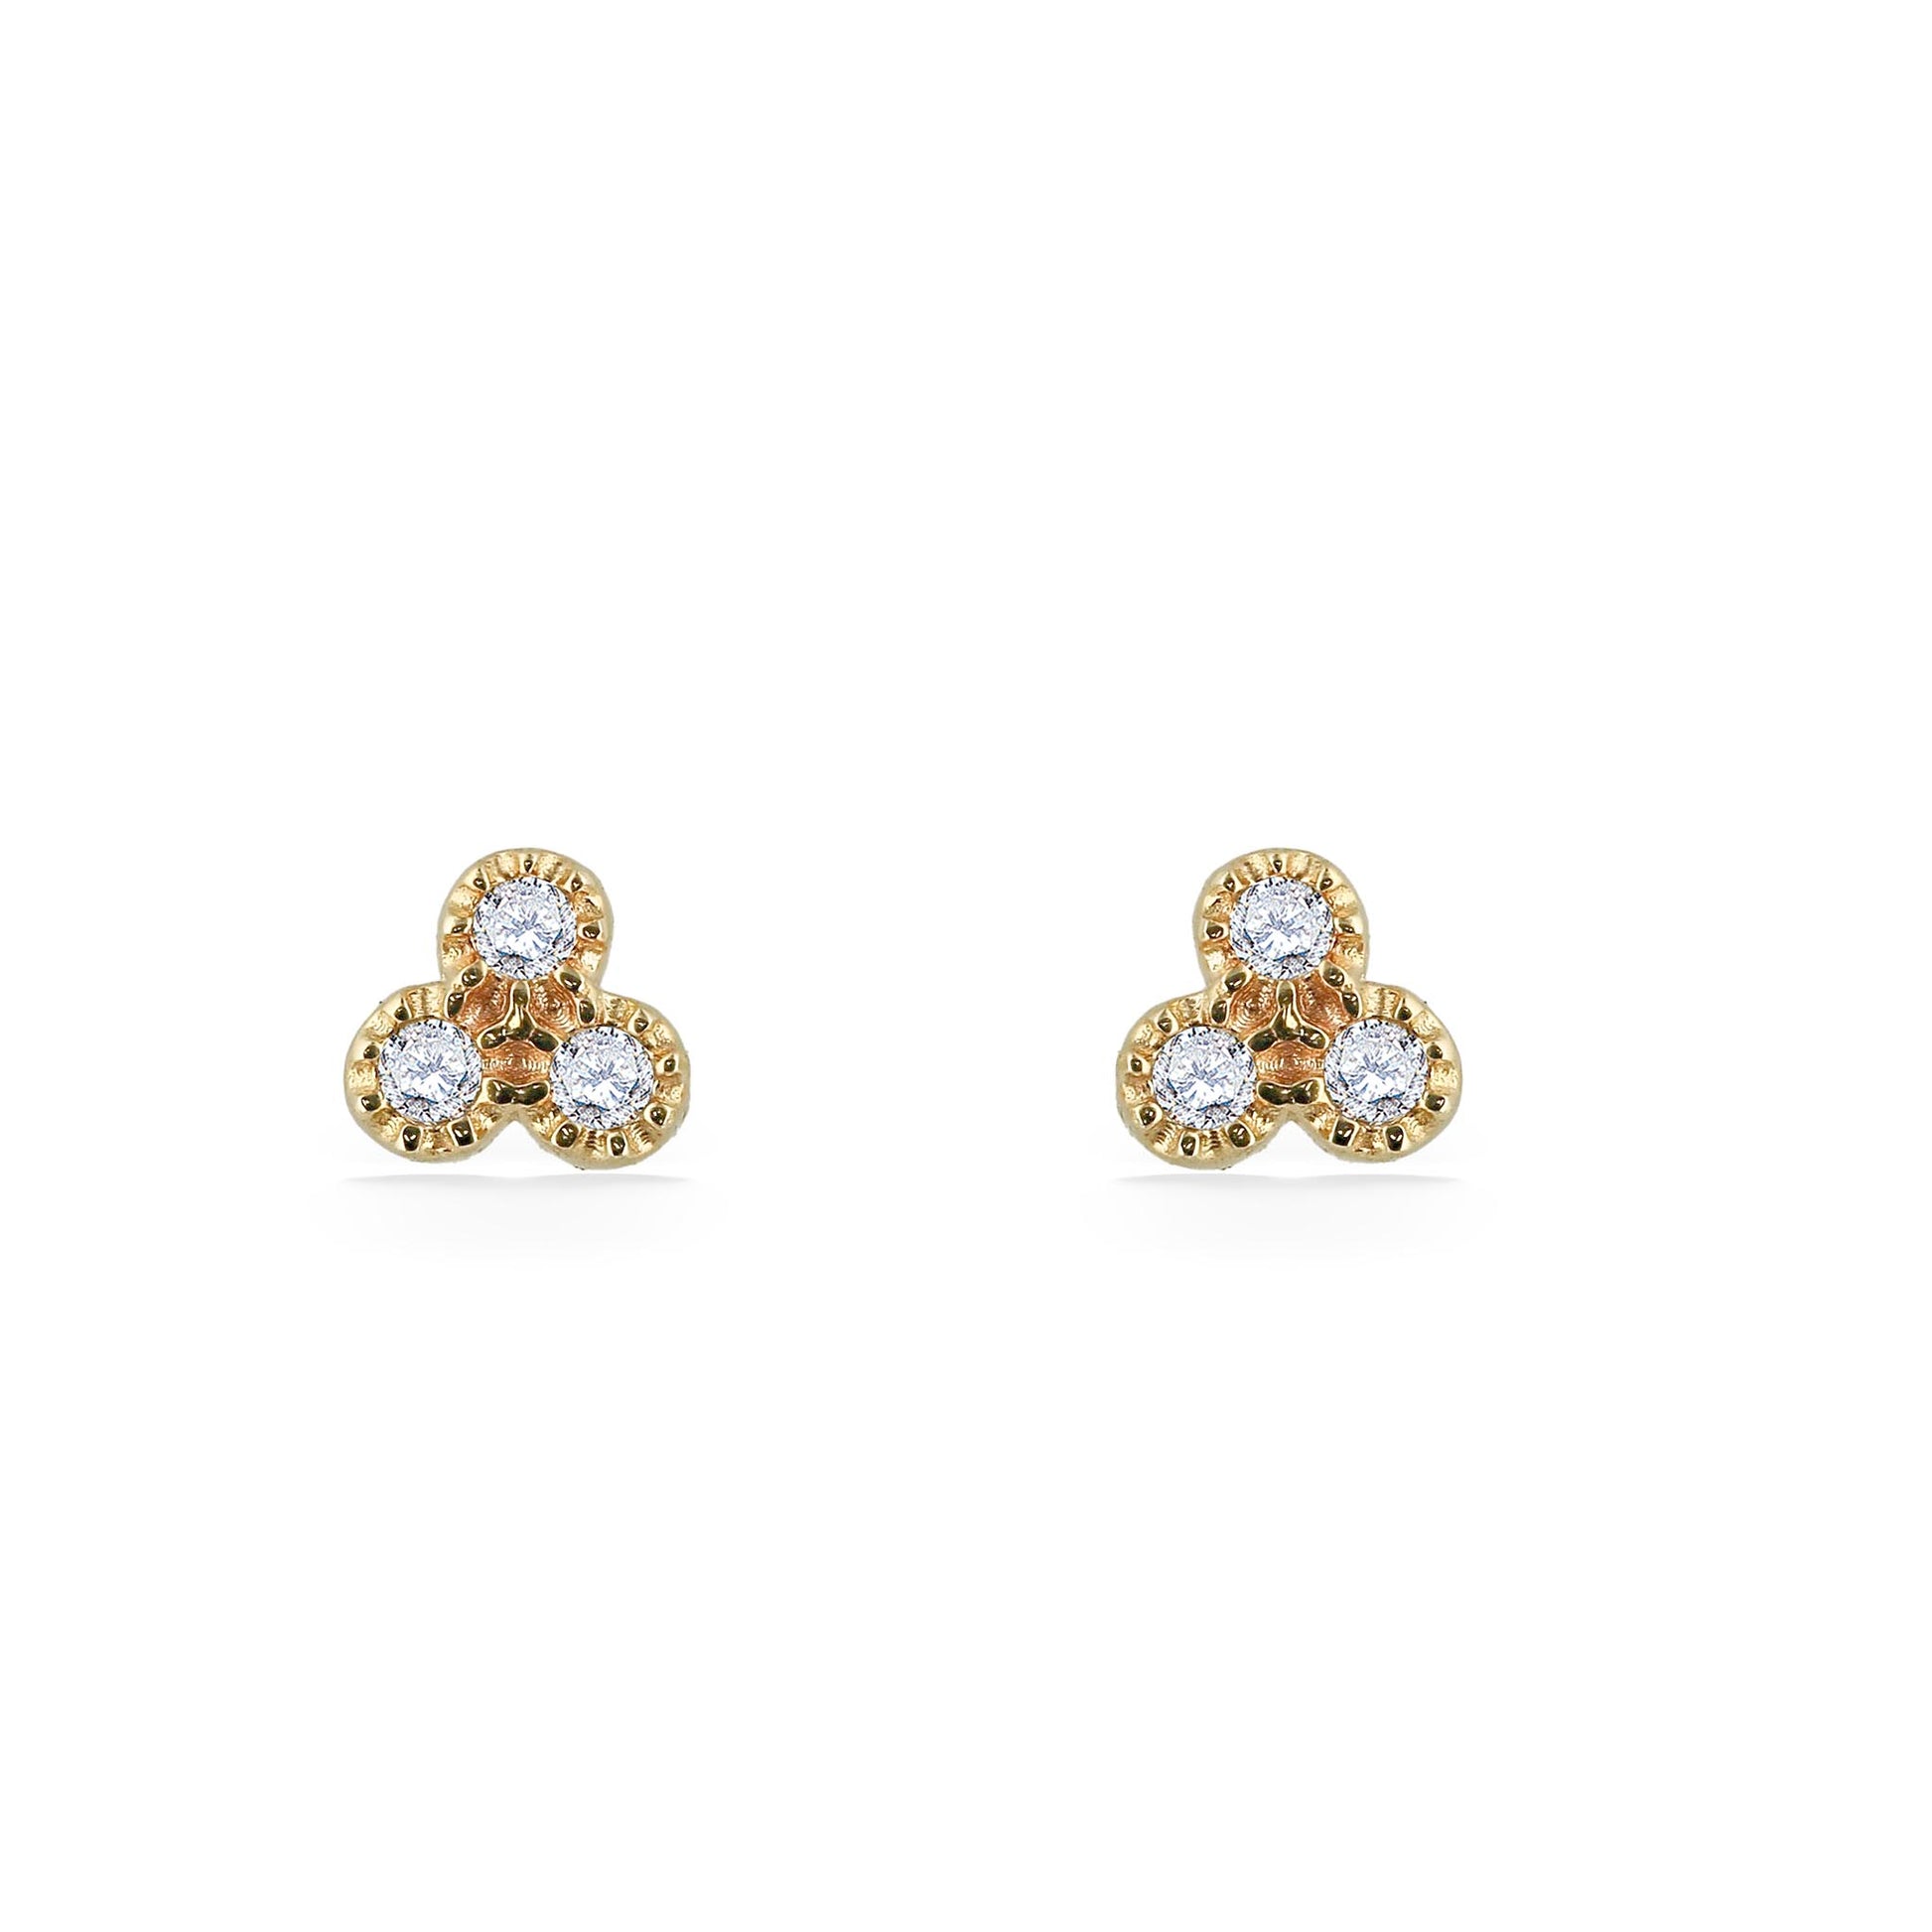 44654 - 14K Yellow Gold - Diamond Cluster Stud Earrings